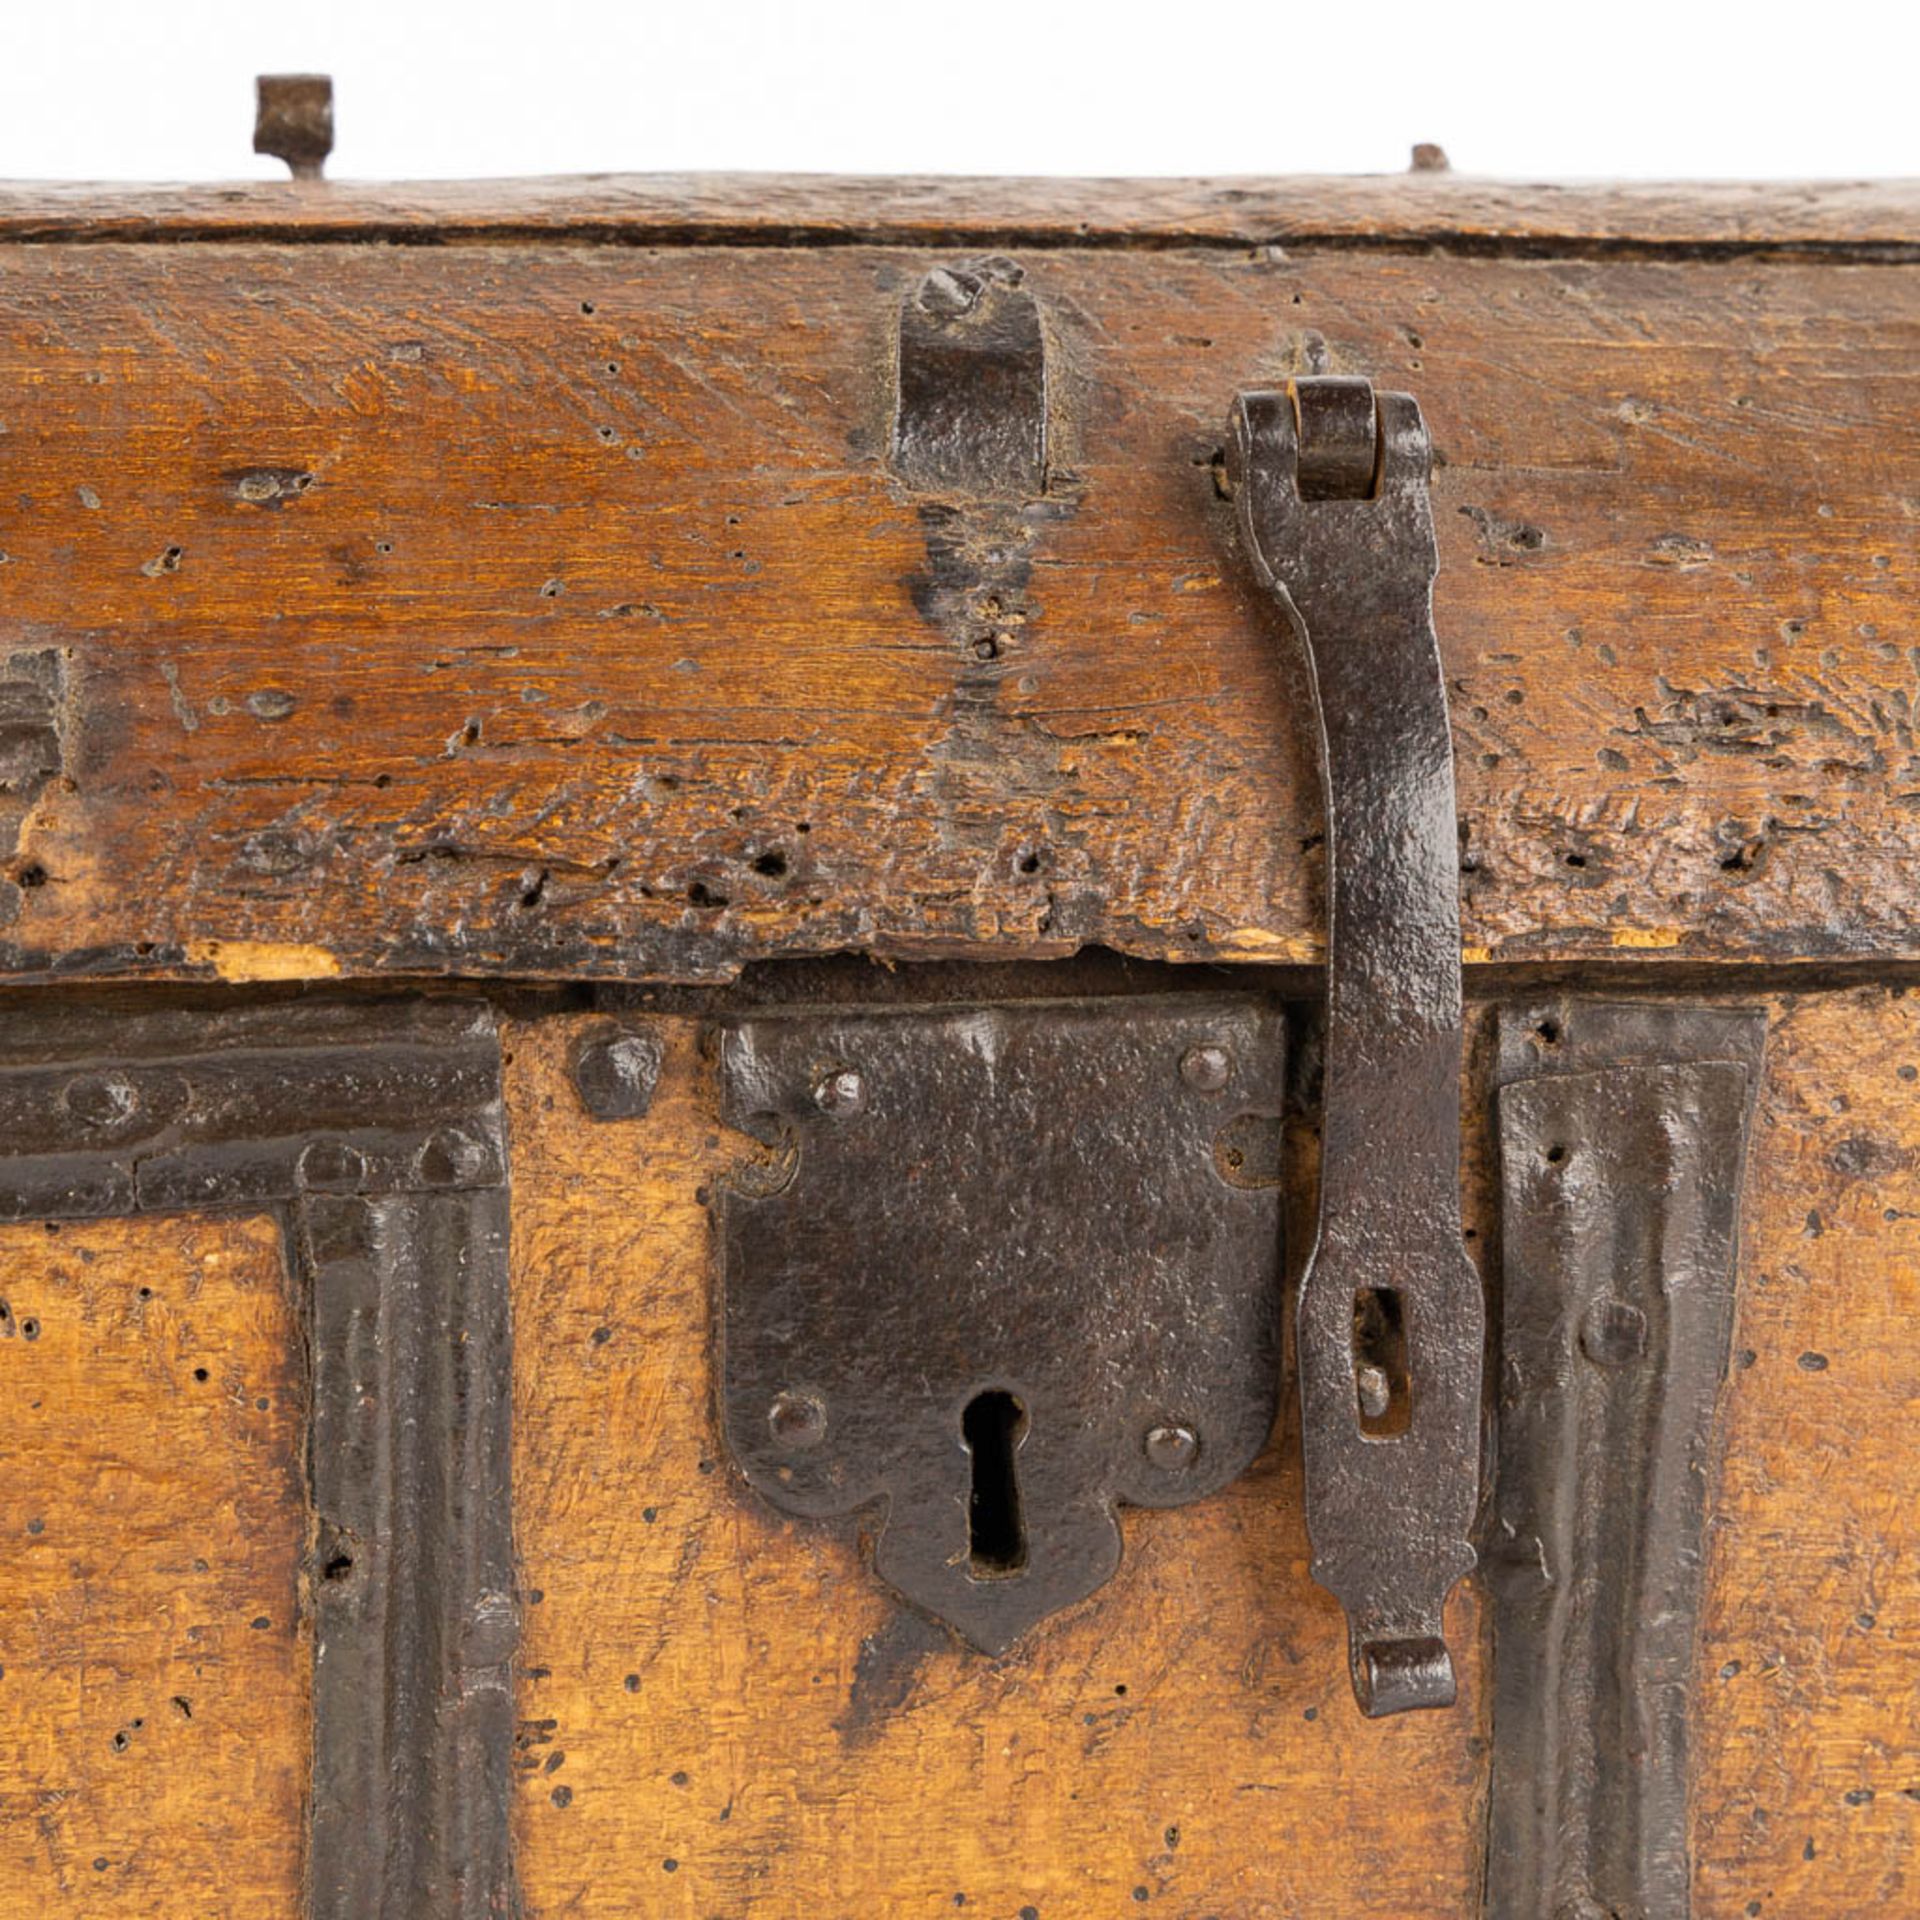 An antique money box or storage chest, wood and wrought iron, 16th/17th C. (L:20 x W:36 x H:22 cm) - Bild 13 aus 14